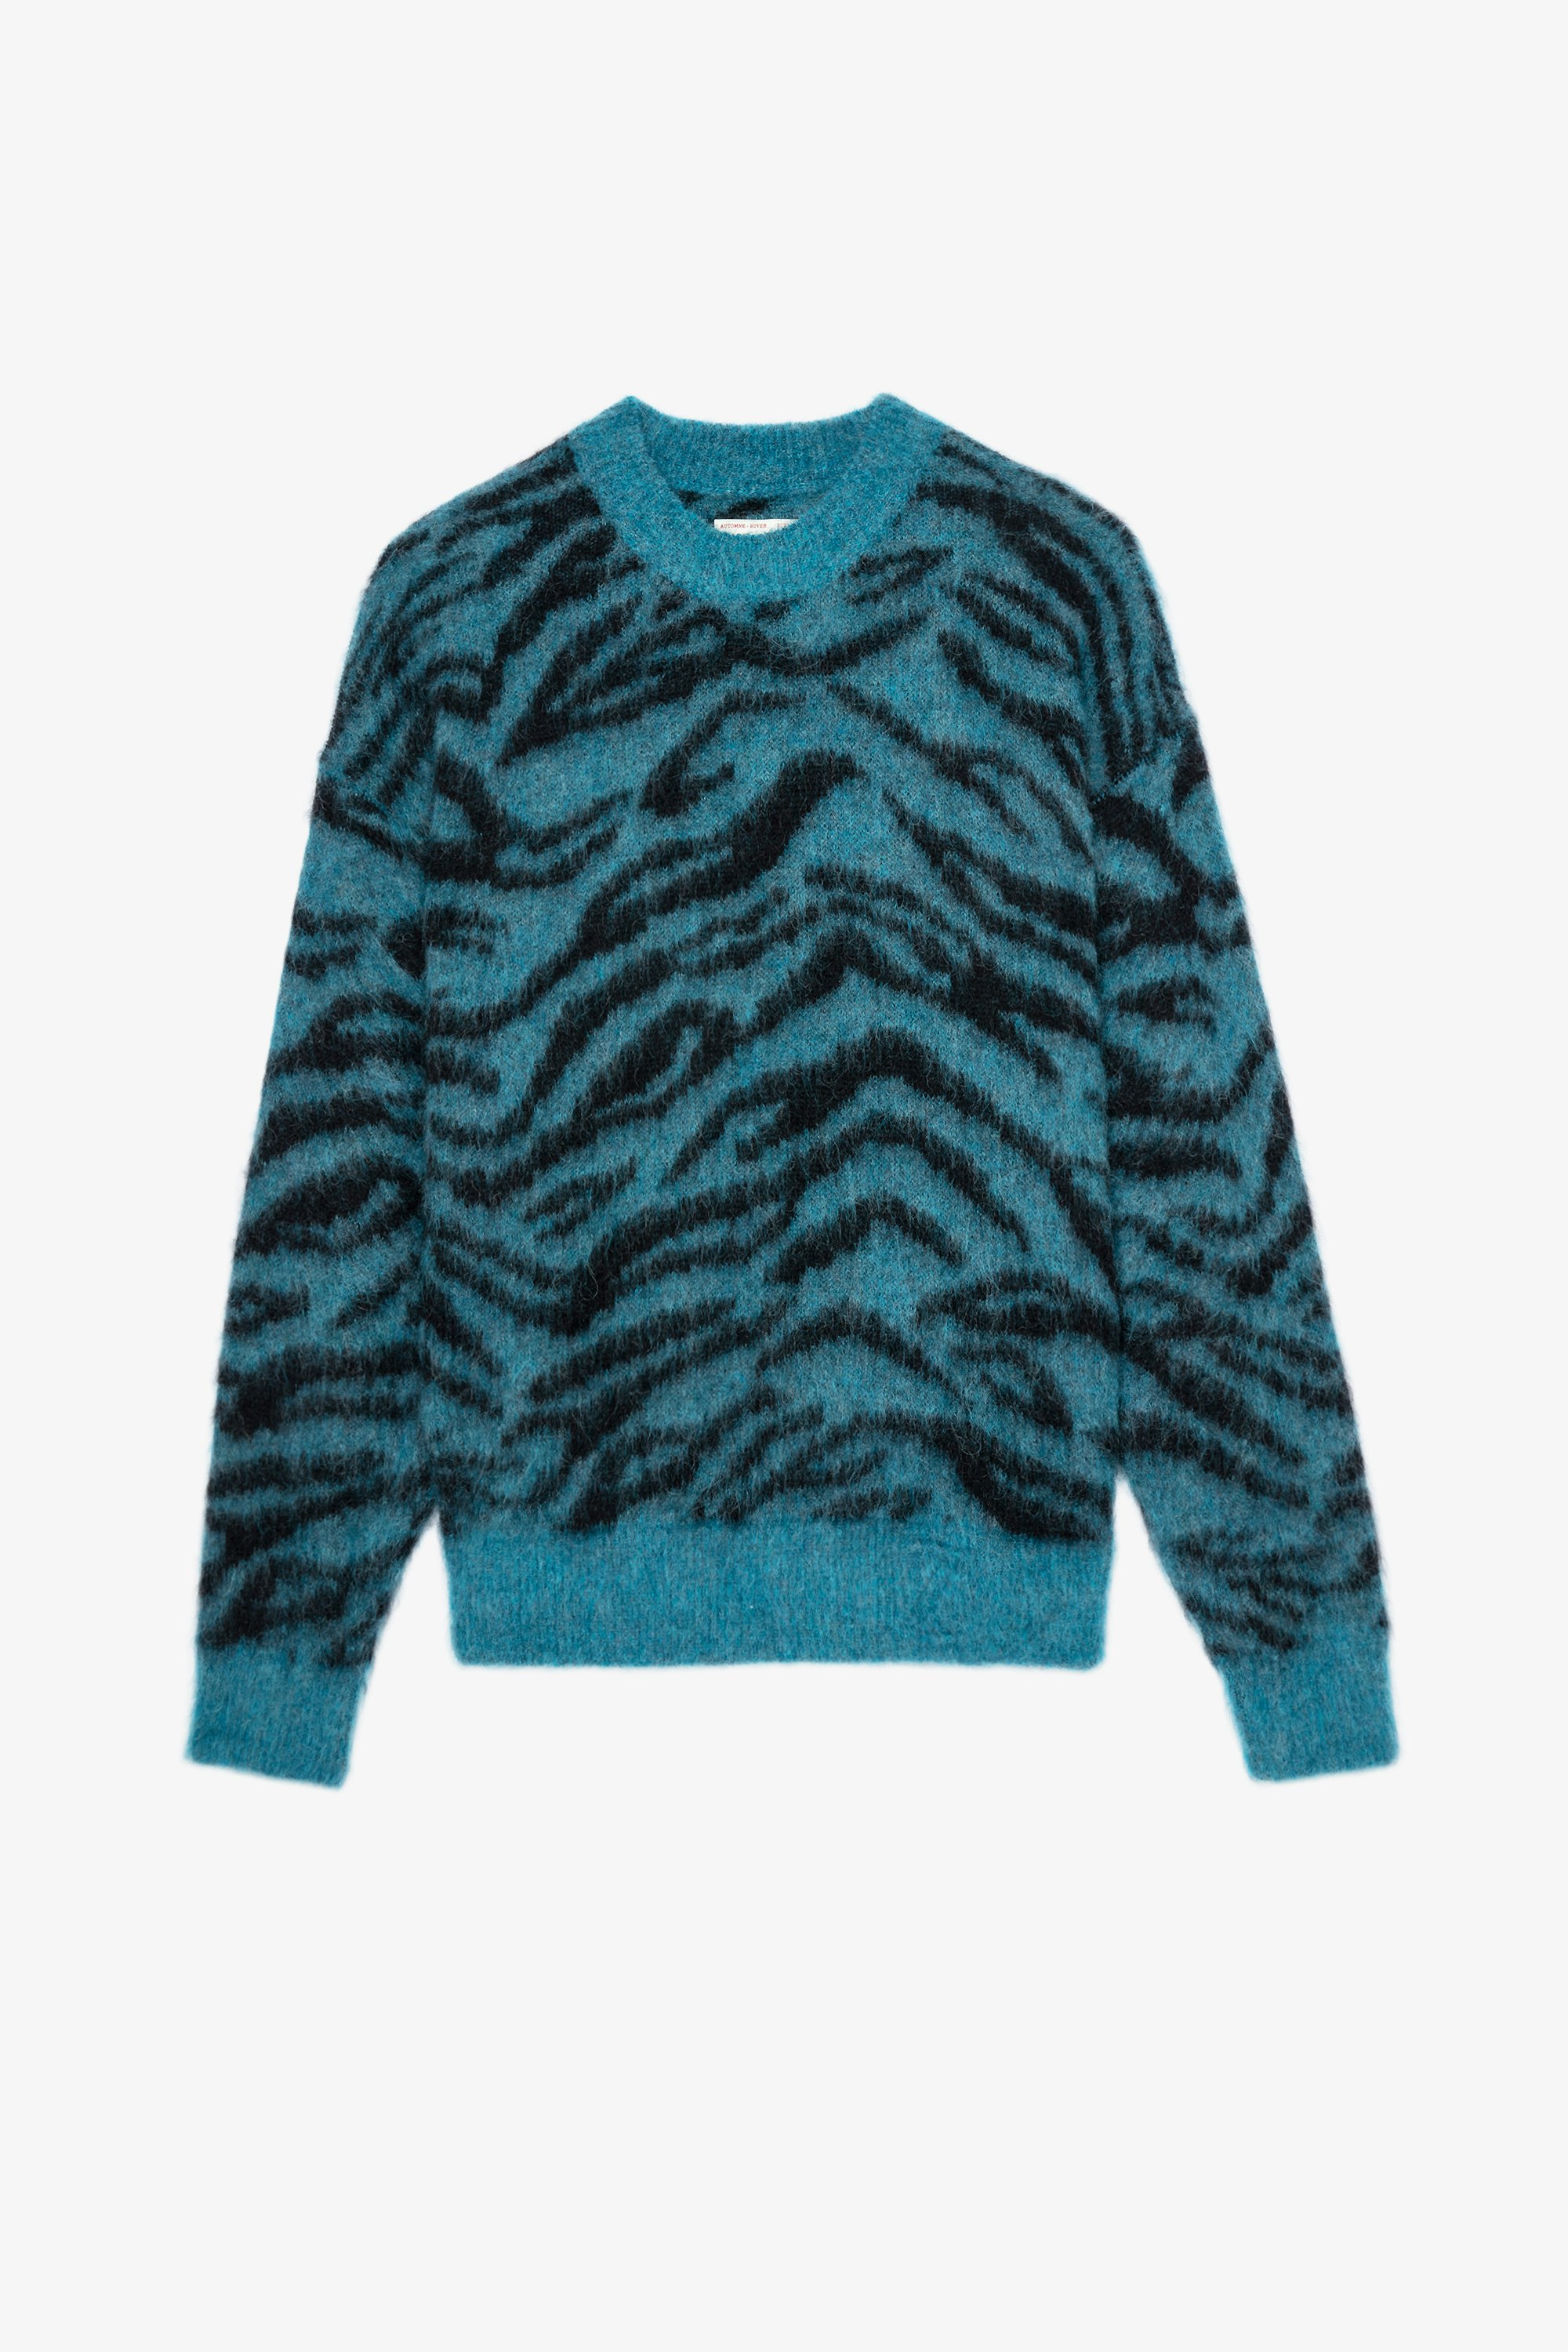 Rita Tiger ニット Men’s blue round-neck knit jumper with long sleeves